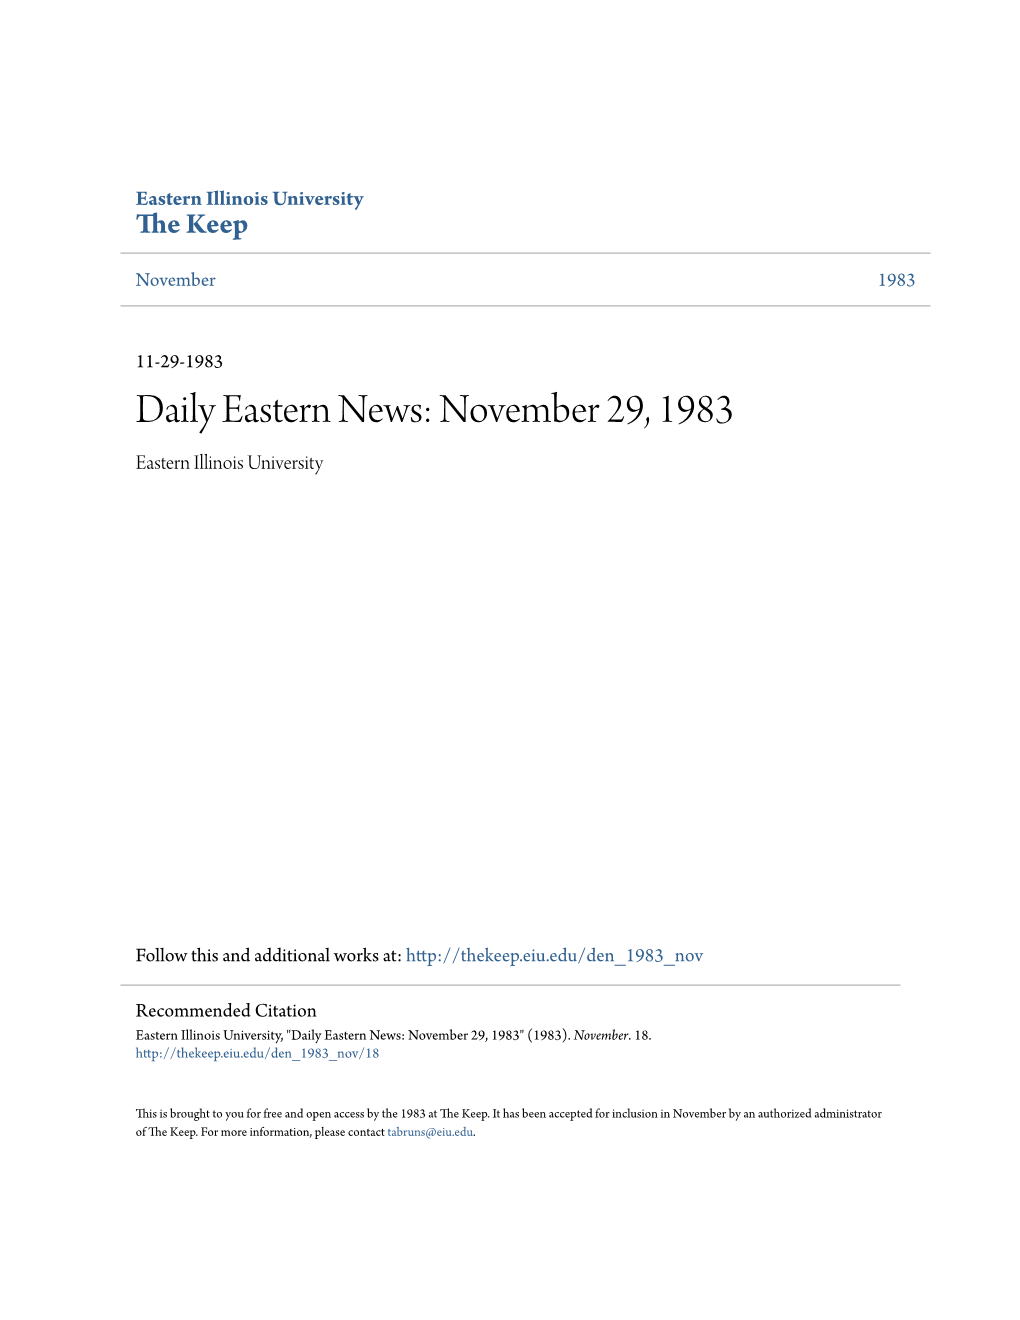 November 29, 1983 Eastern Illinois University